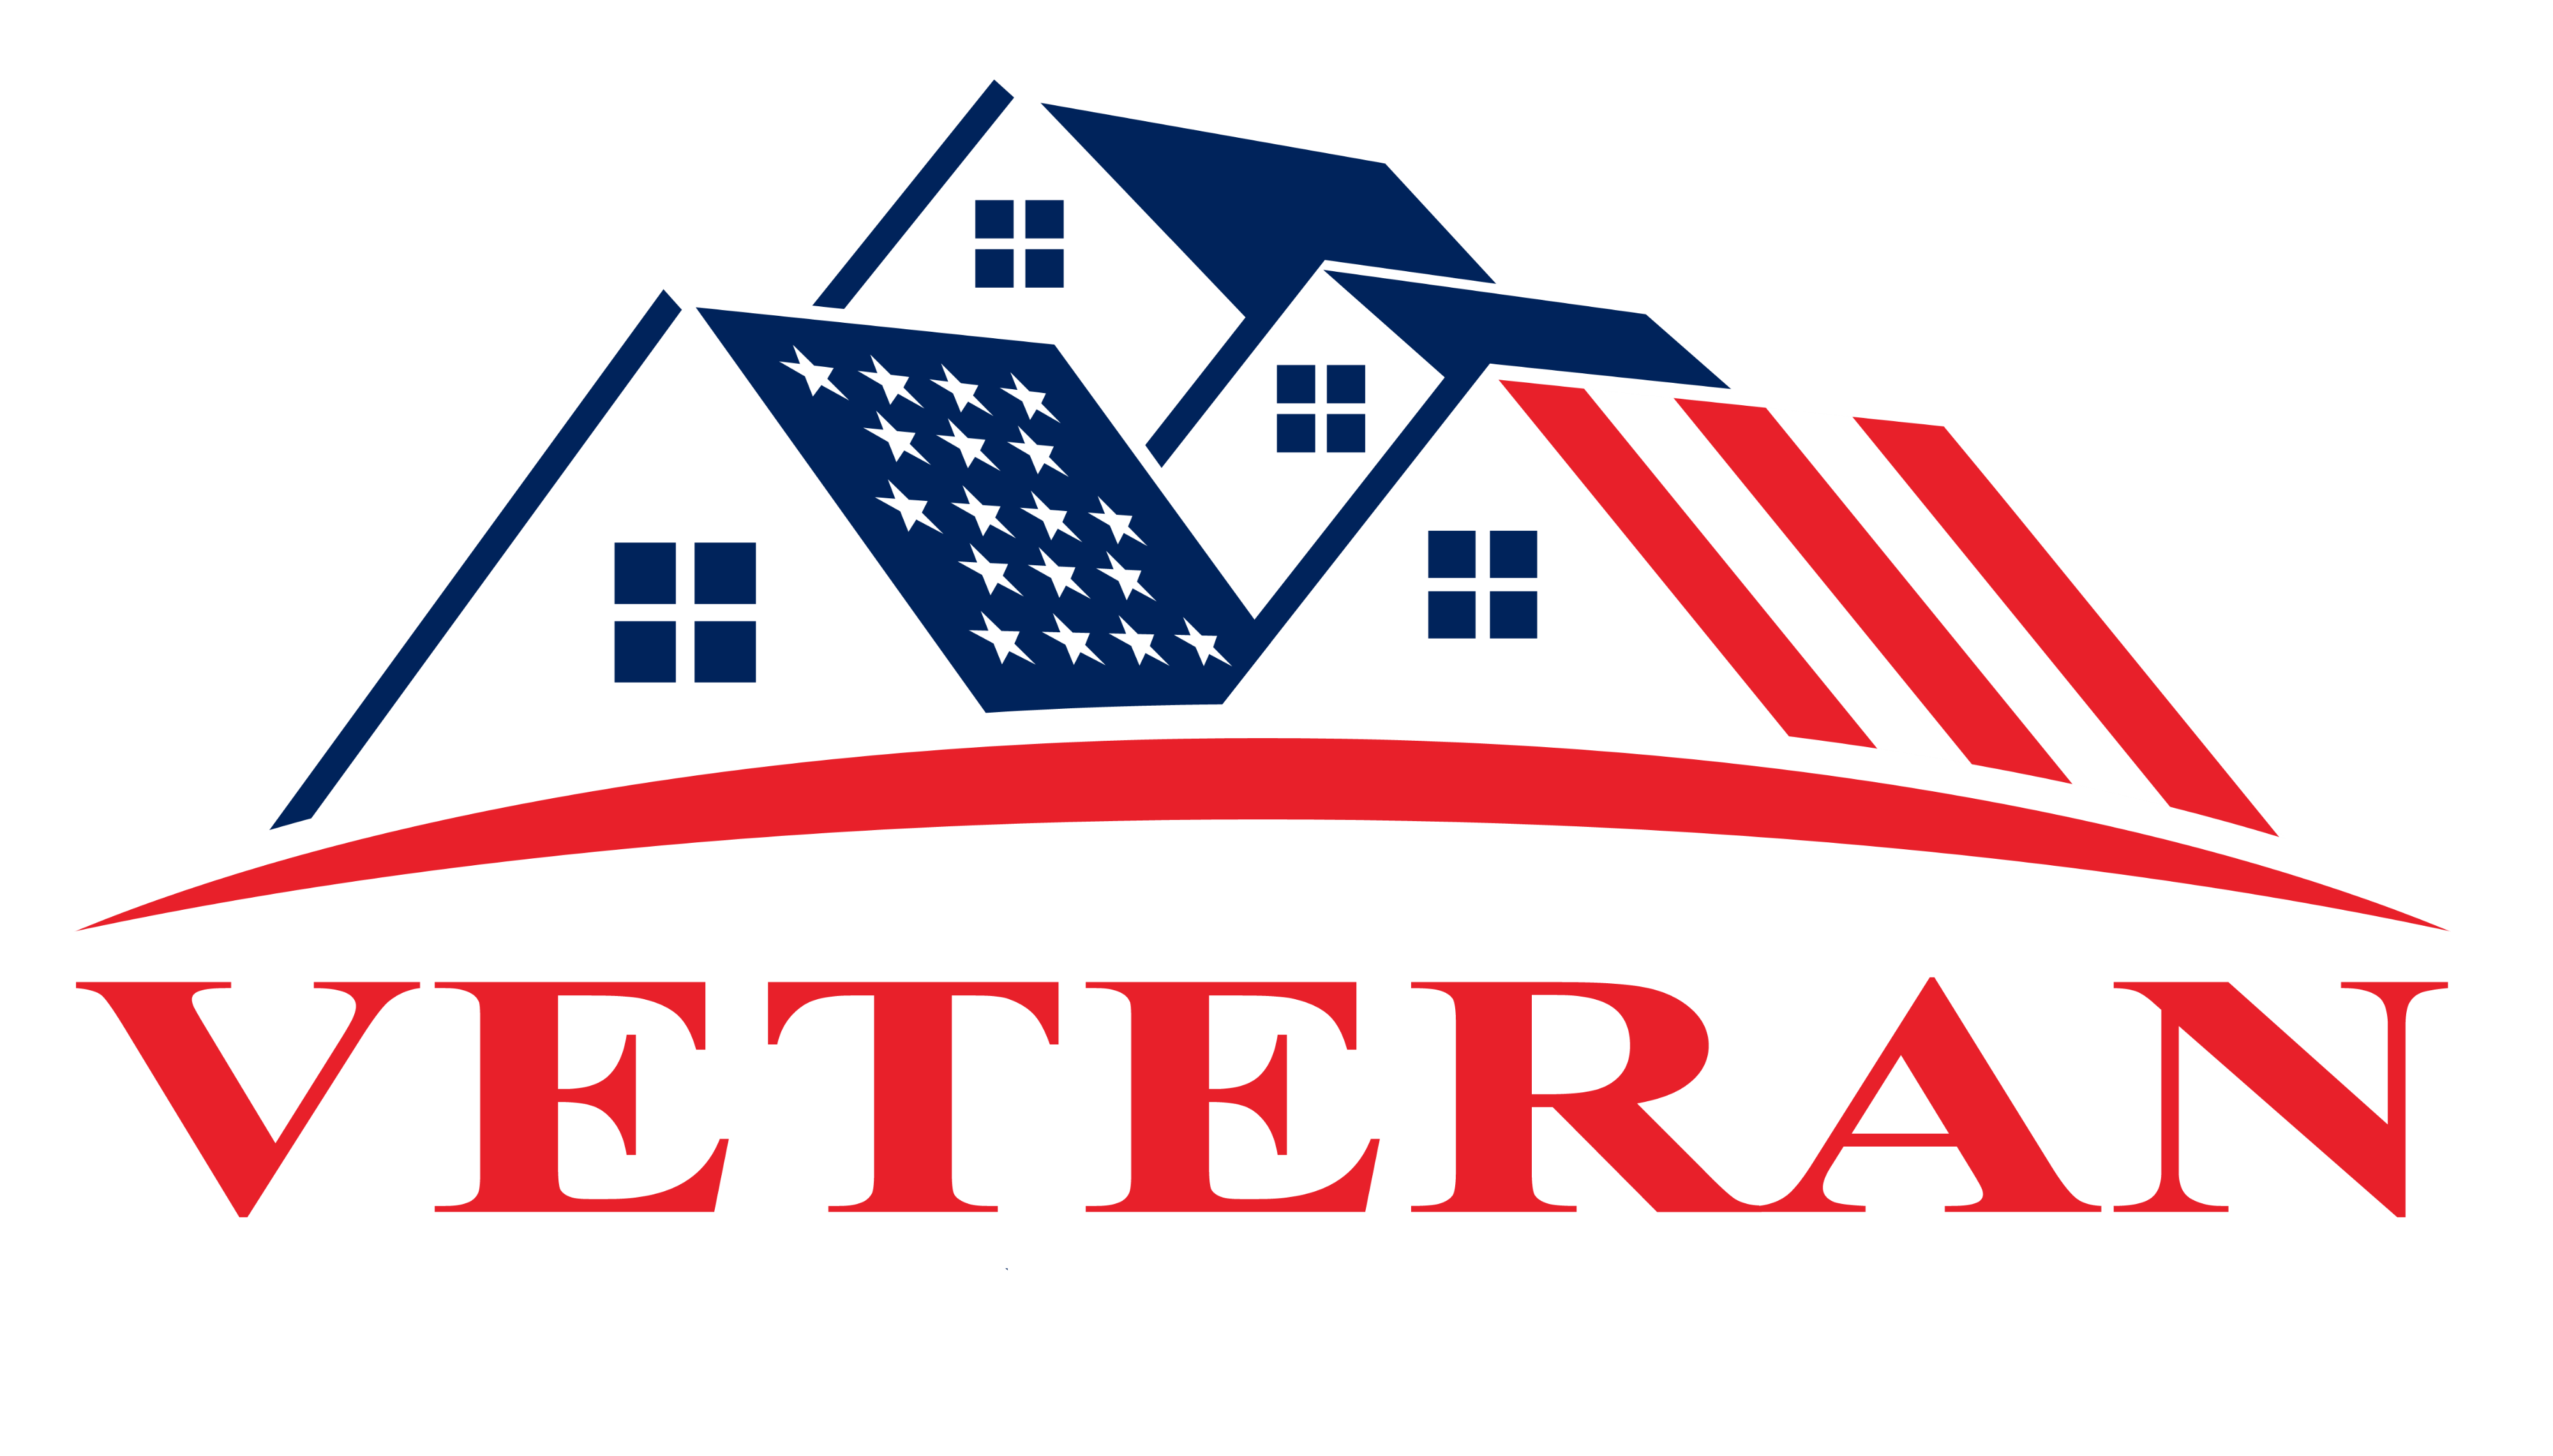 Veteran Real Estate Agents